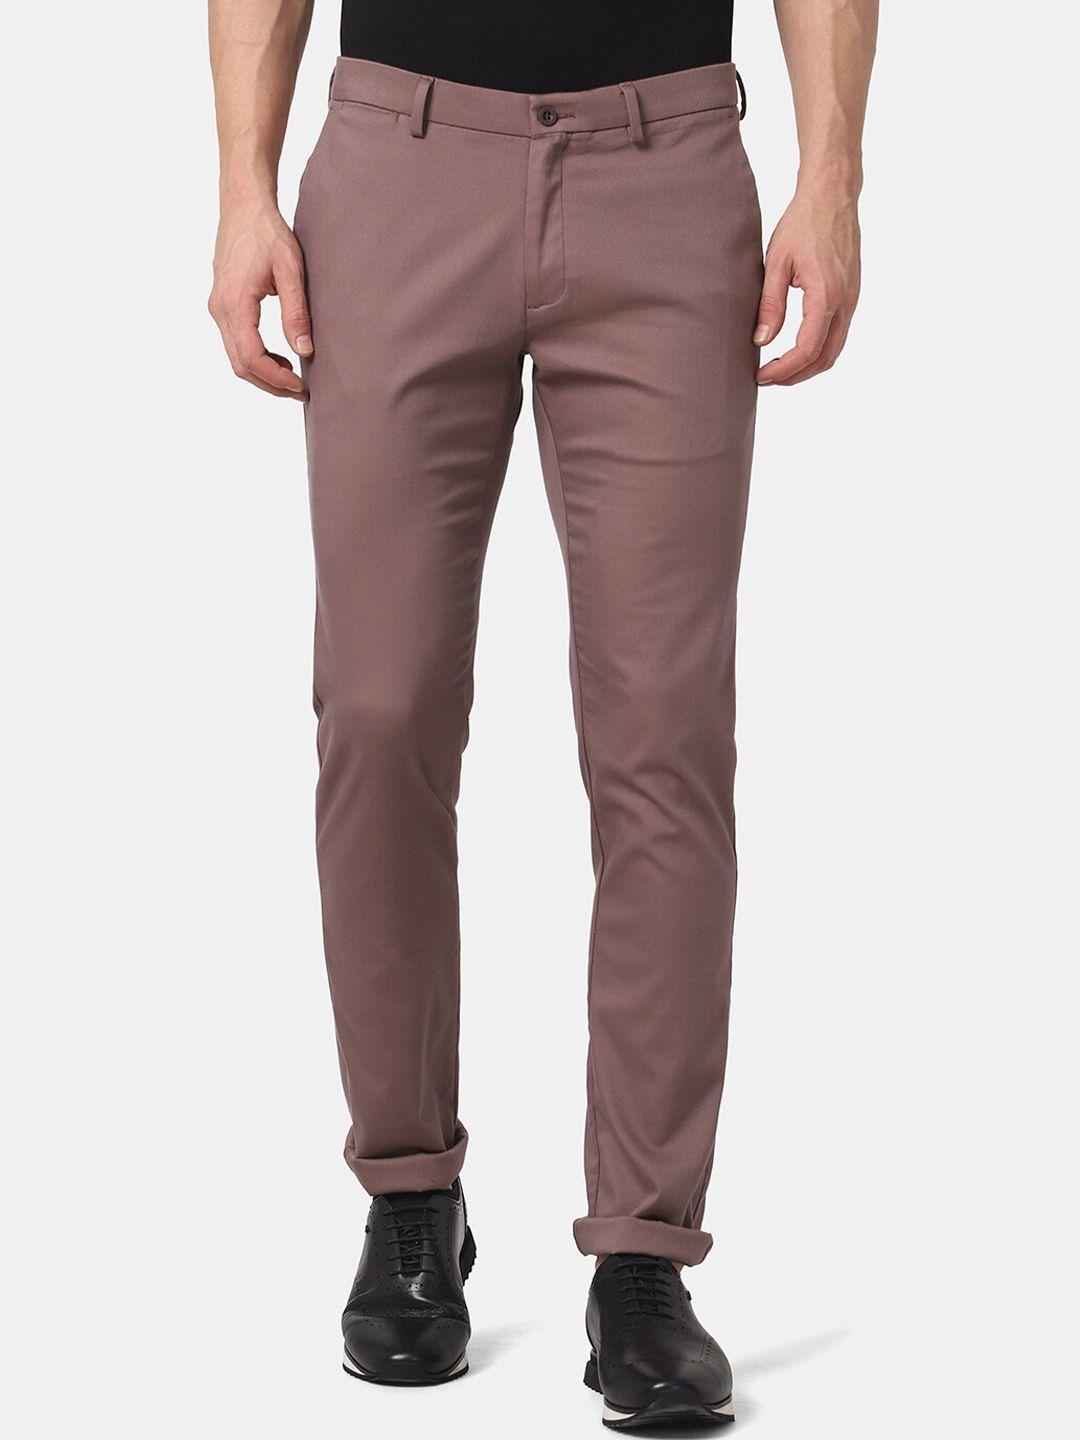 blackberrys-techpro-collection-men-pink-slim-fit-low-rise-trousers